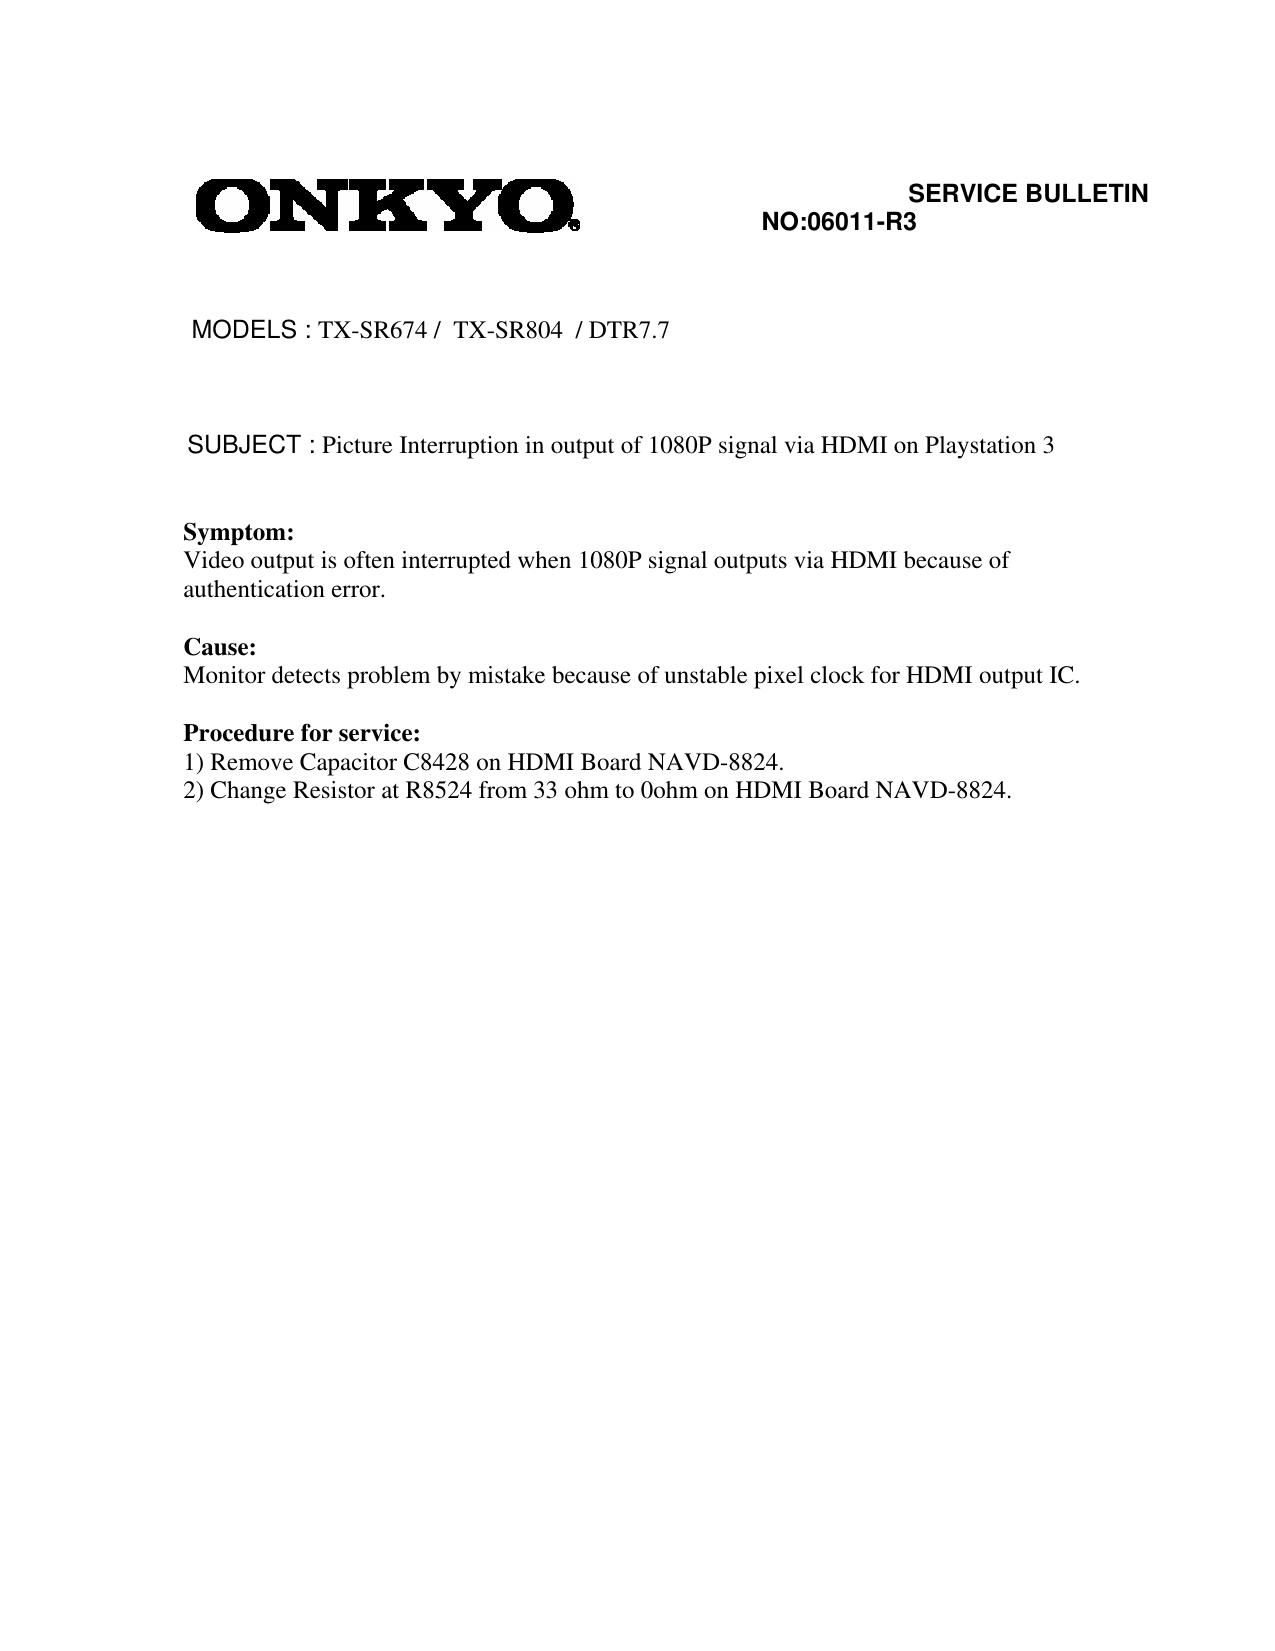 Onkyo TXSR 674 Service Bulletin